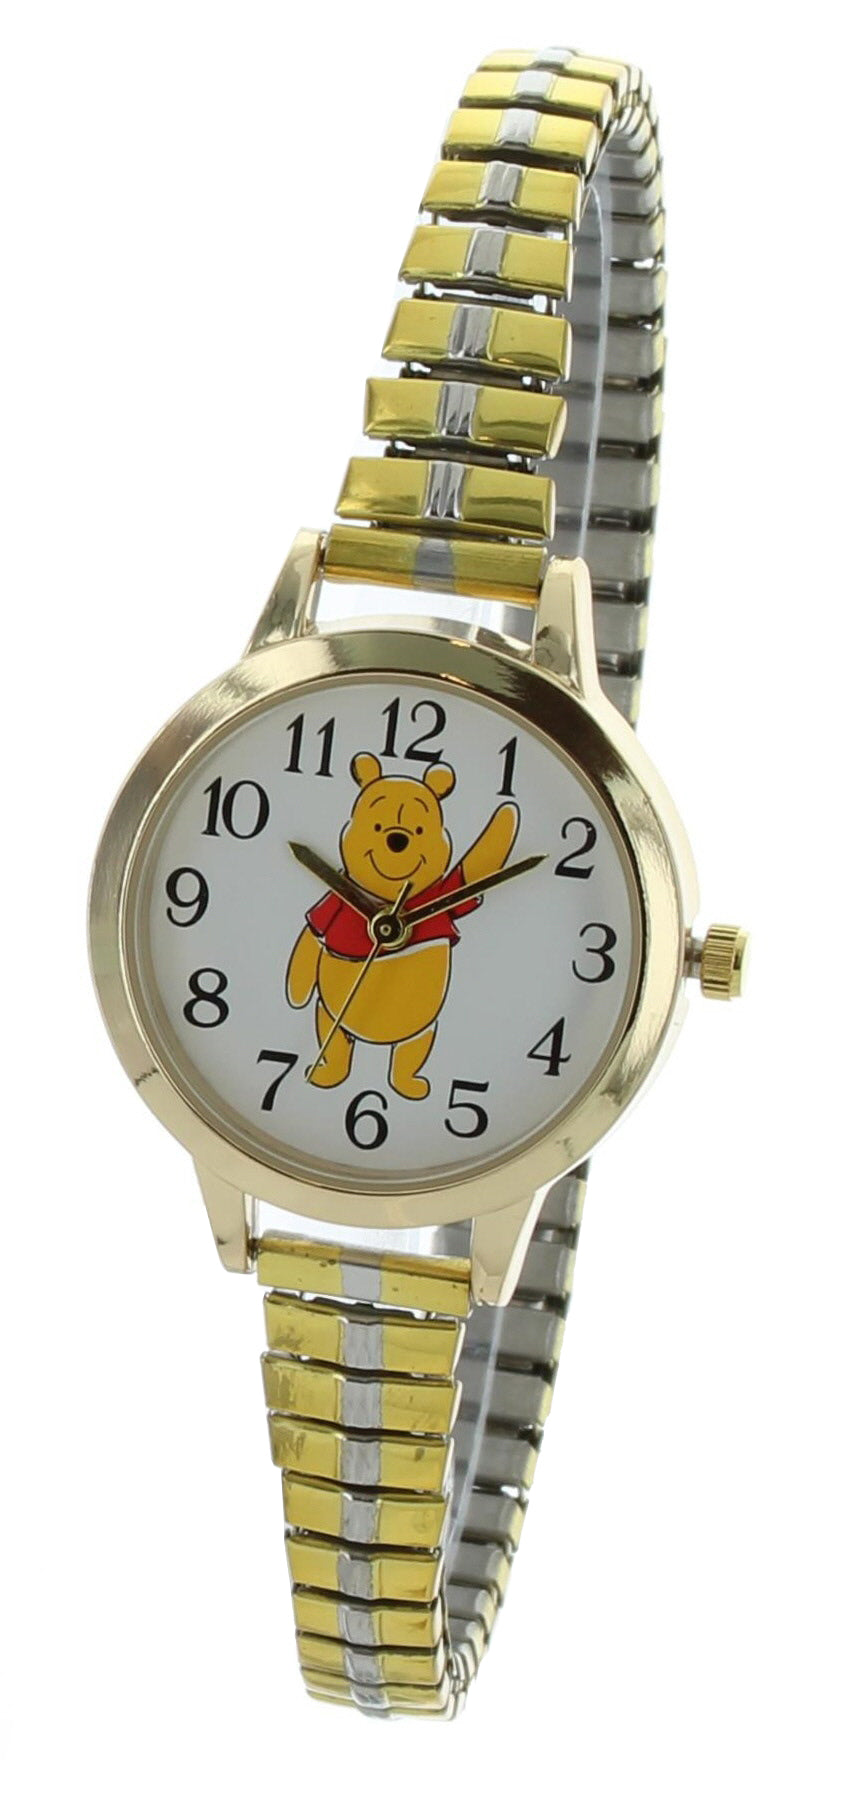 Model: Waving Disney Winnie the Pooh Analog Watch with Stretch Band